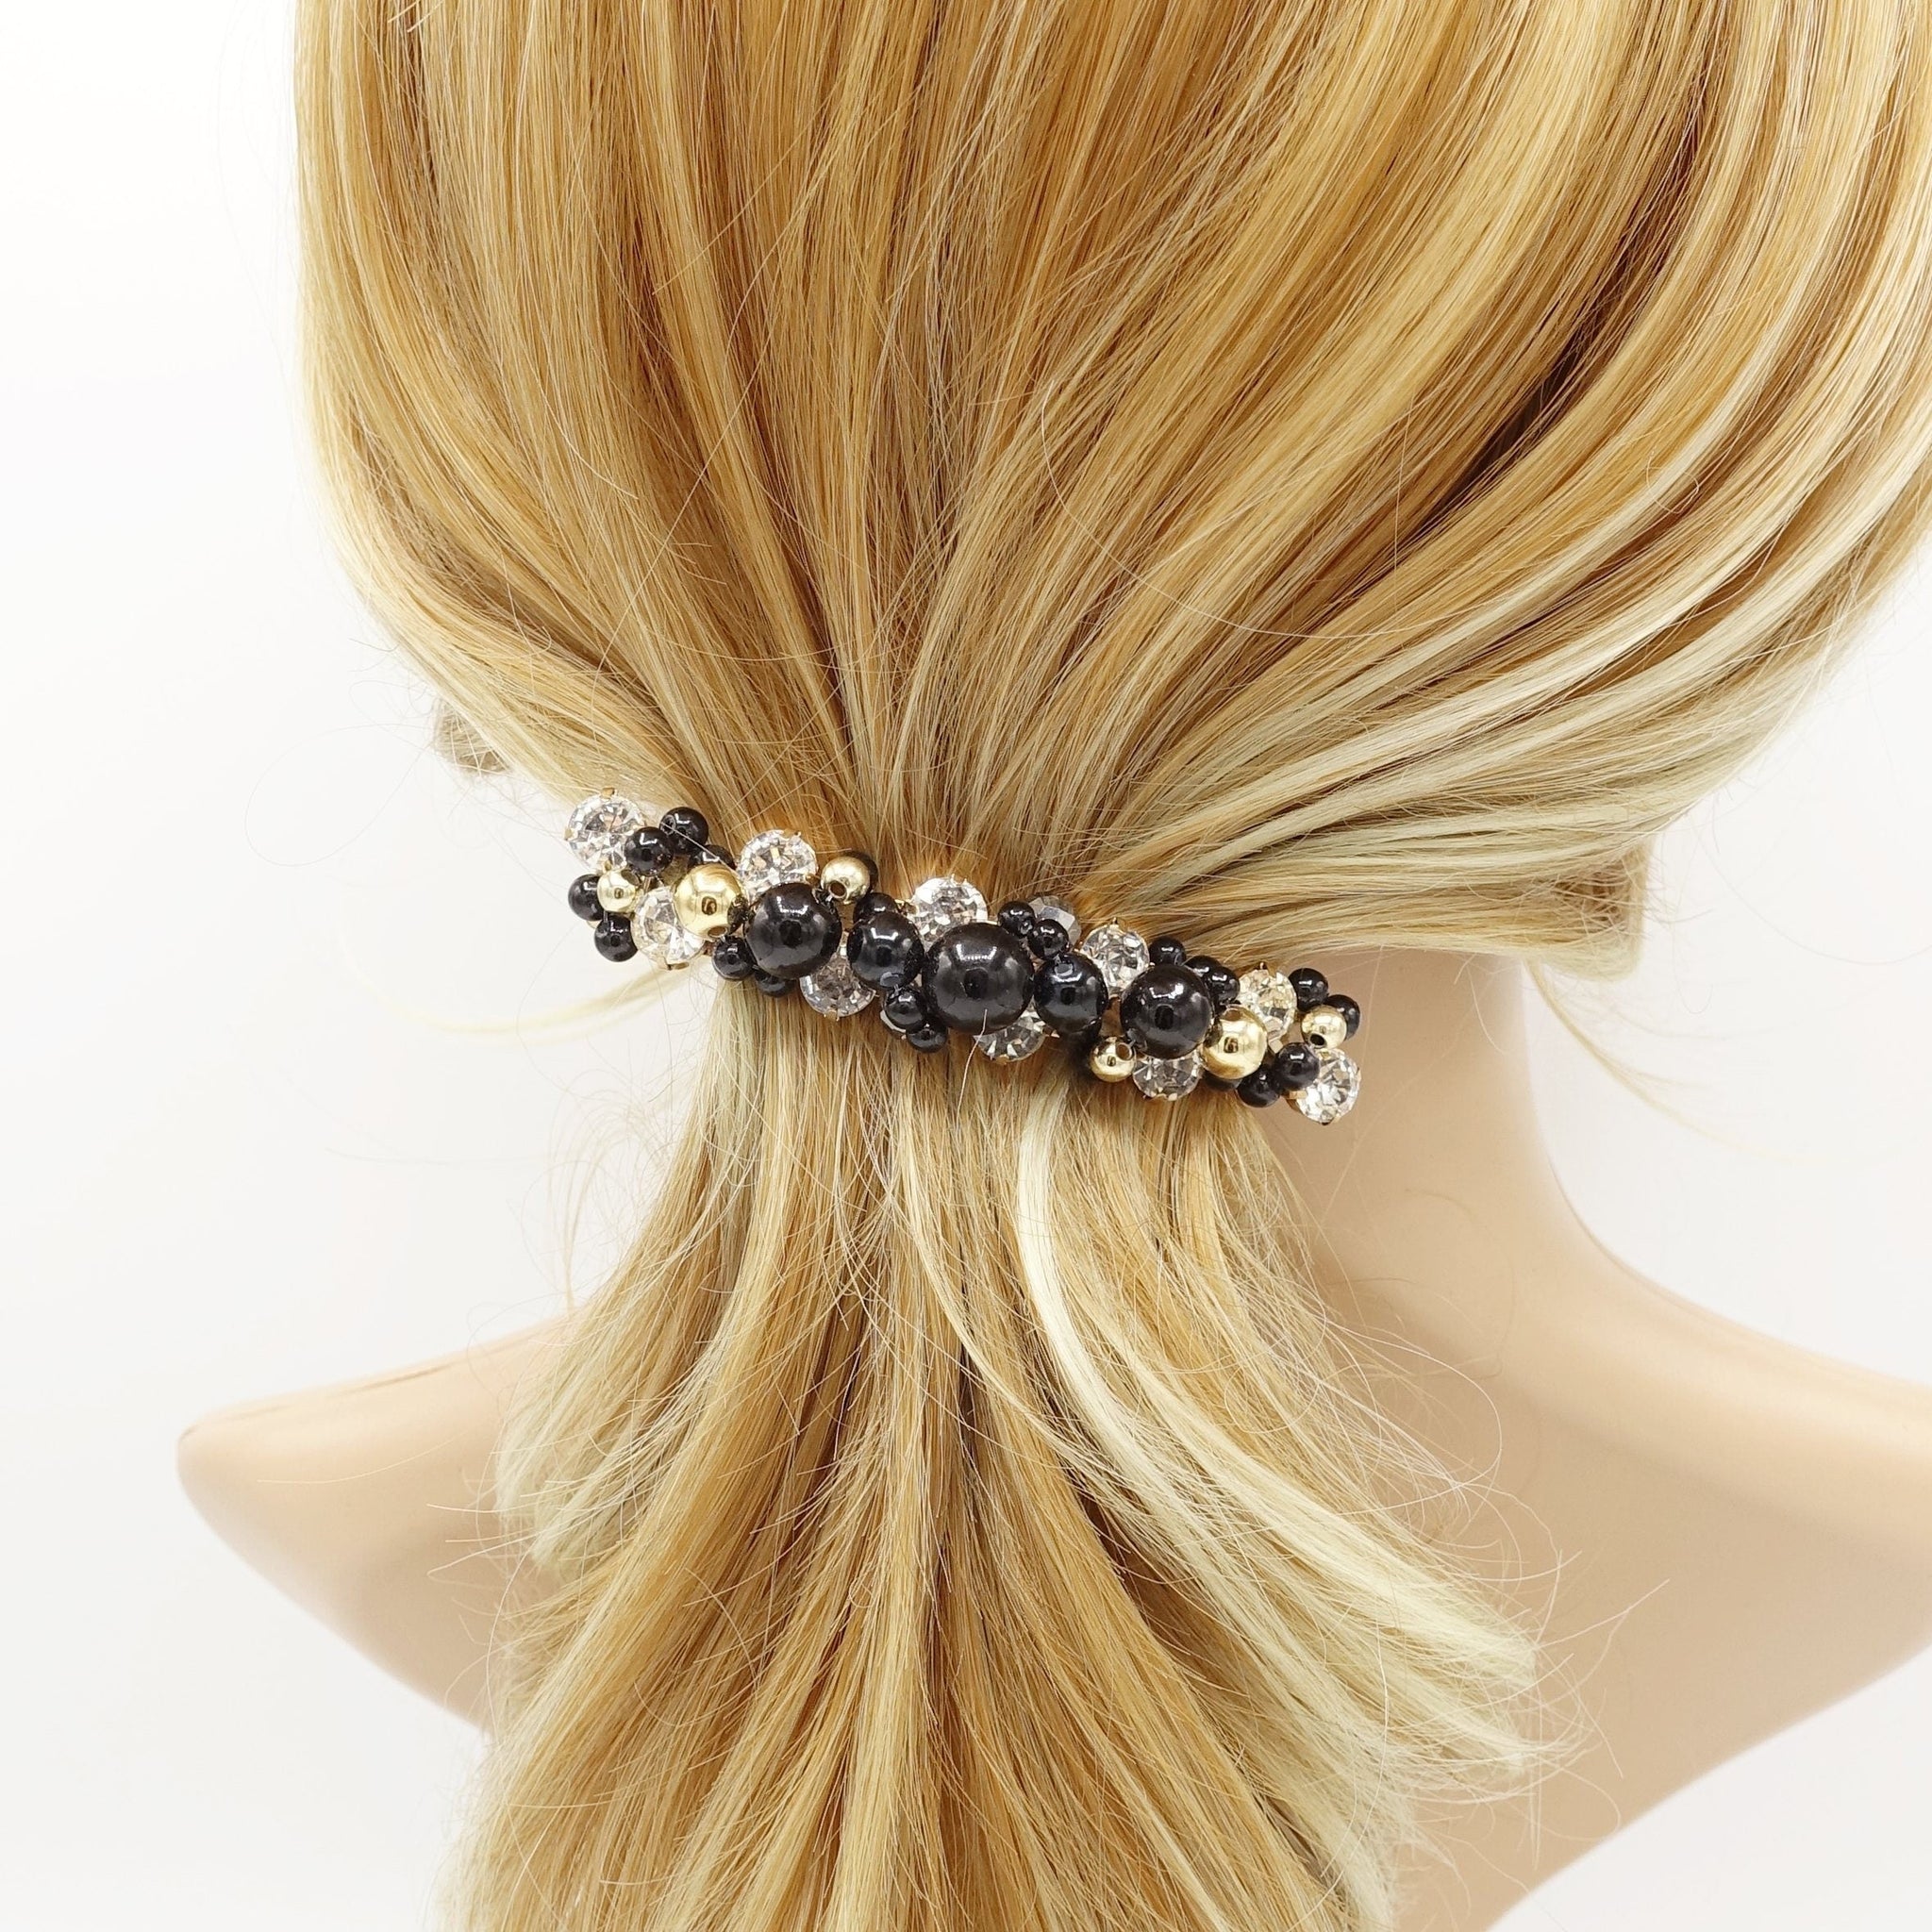 veryshine.com Bridal acc. pearl rhinestone beaded hair barrette ornament embellished french barrette women  hair accessory